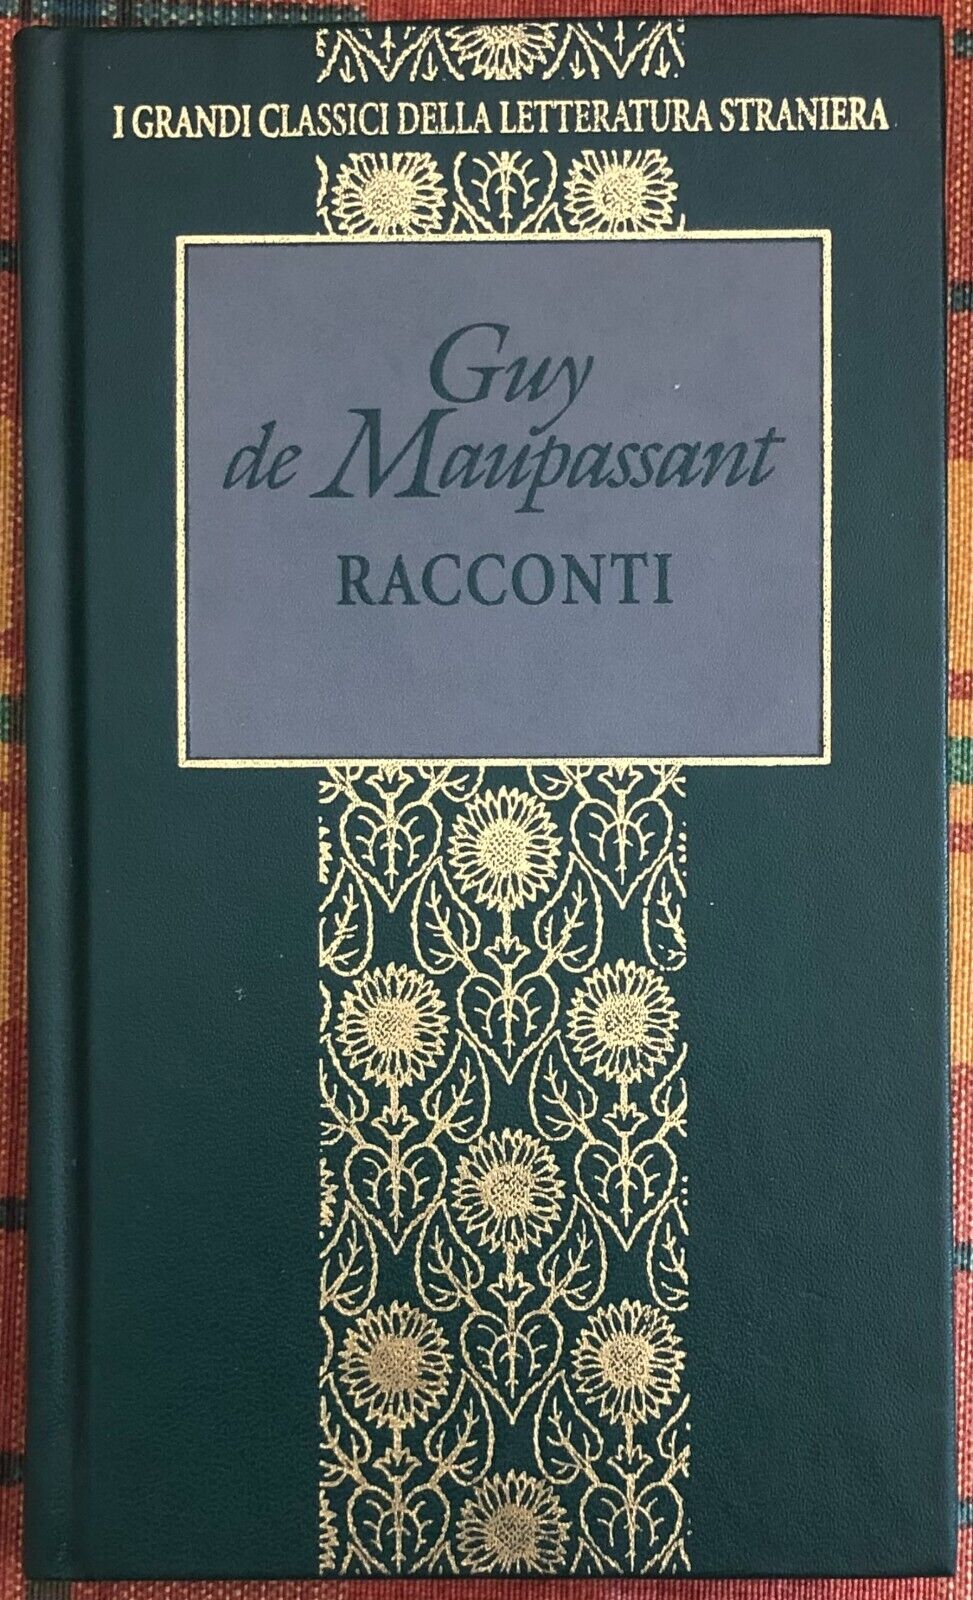 Racconti di Guy De Maupassant, 1996, Fabbri Editori